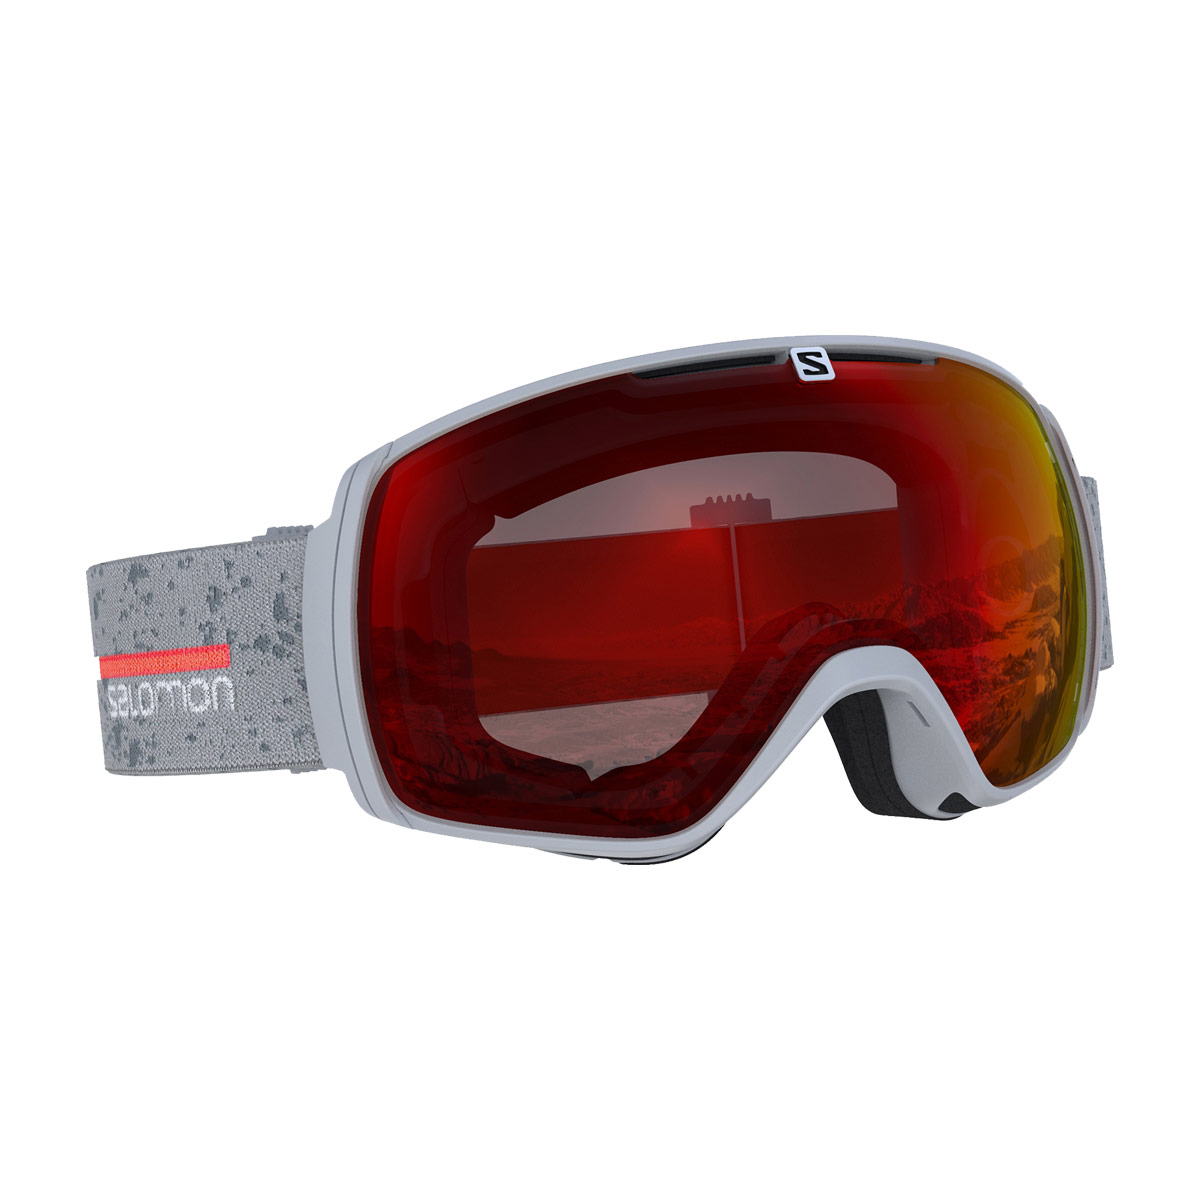 Salomon XT One Men's Women's Gray Ski Snowboard Red Tint Gear for sale online | eBay